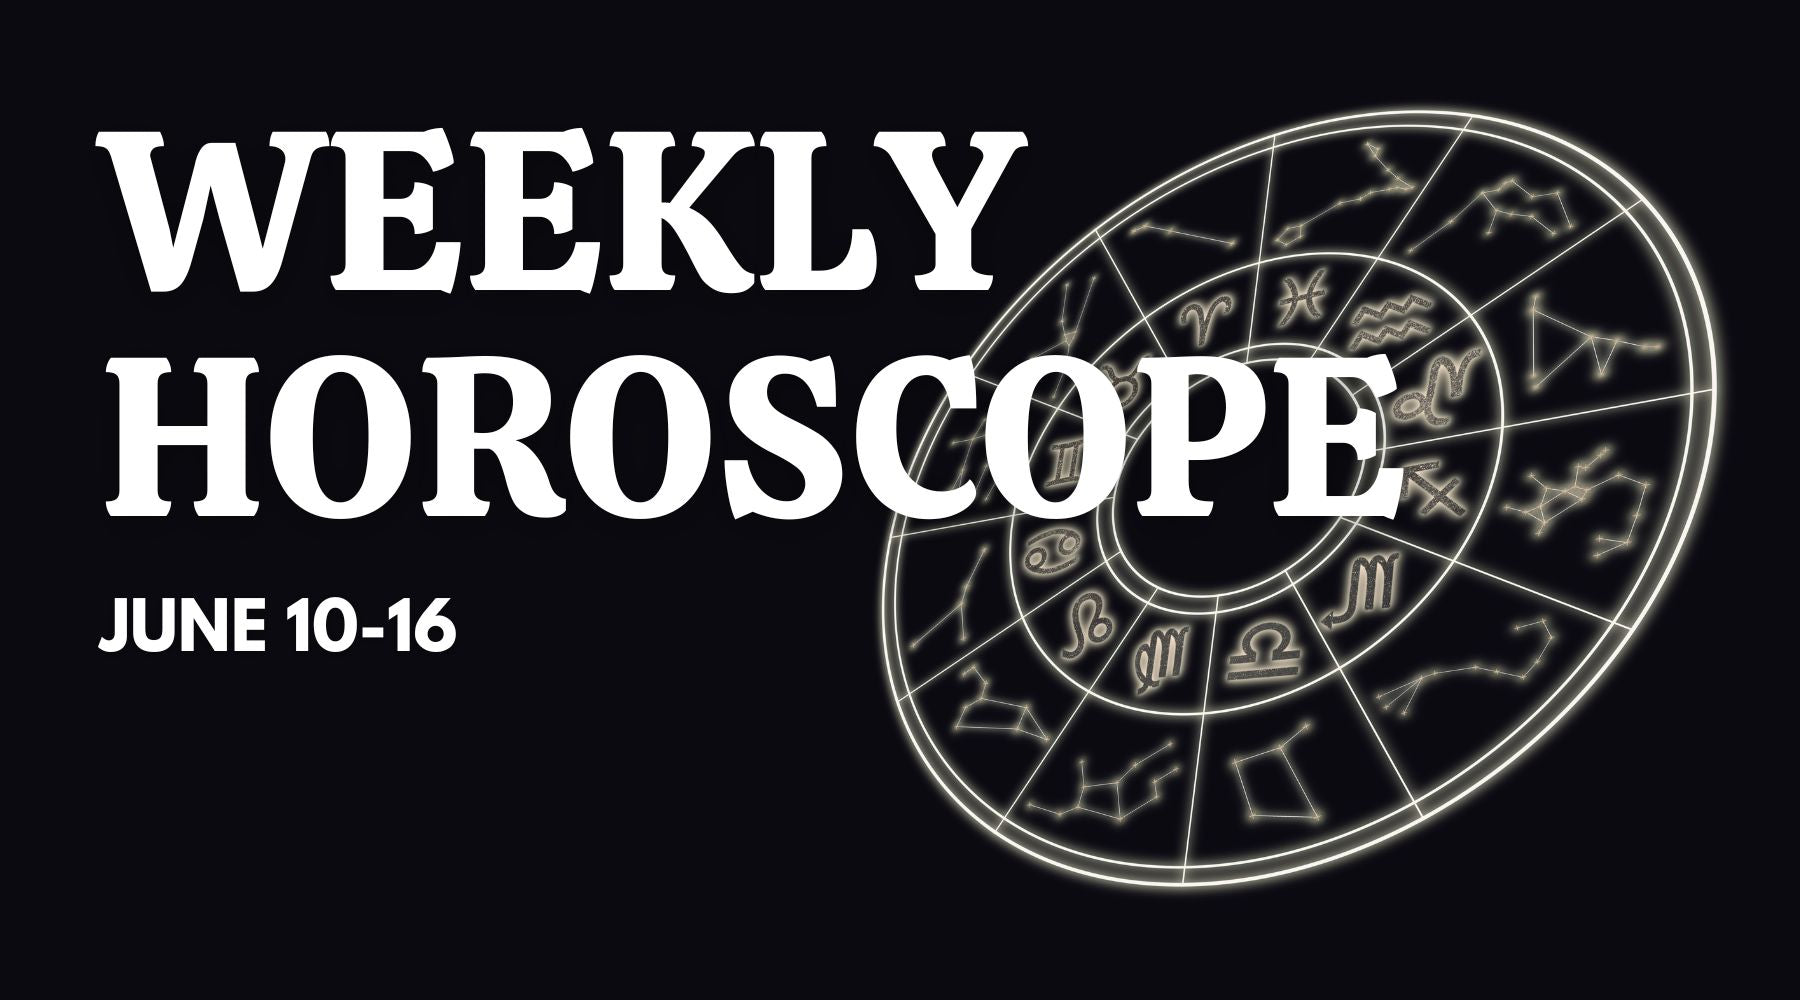 Weekly Horoscope: June 10 - June 16